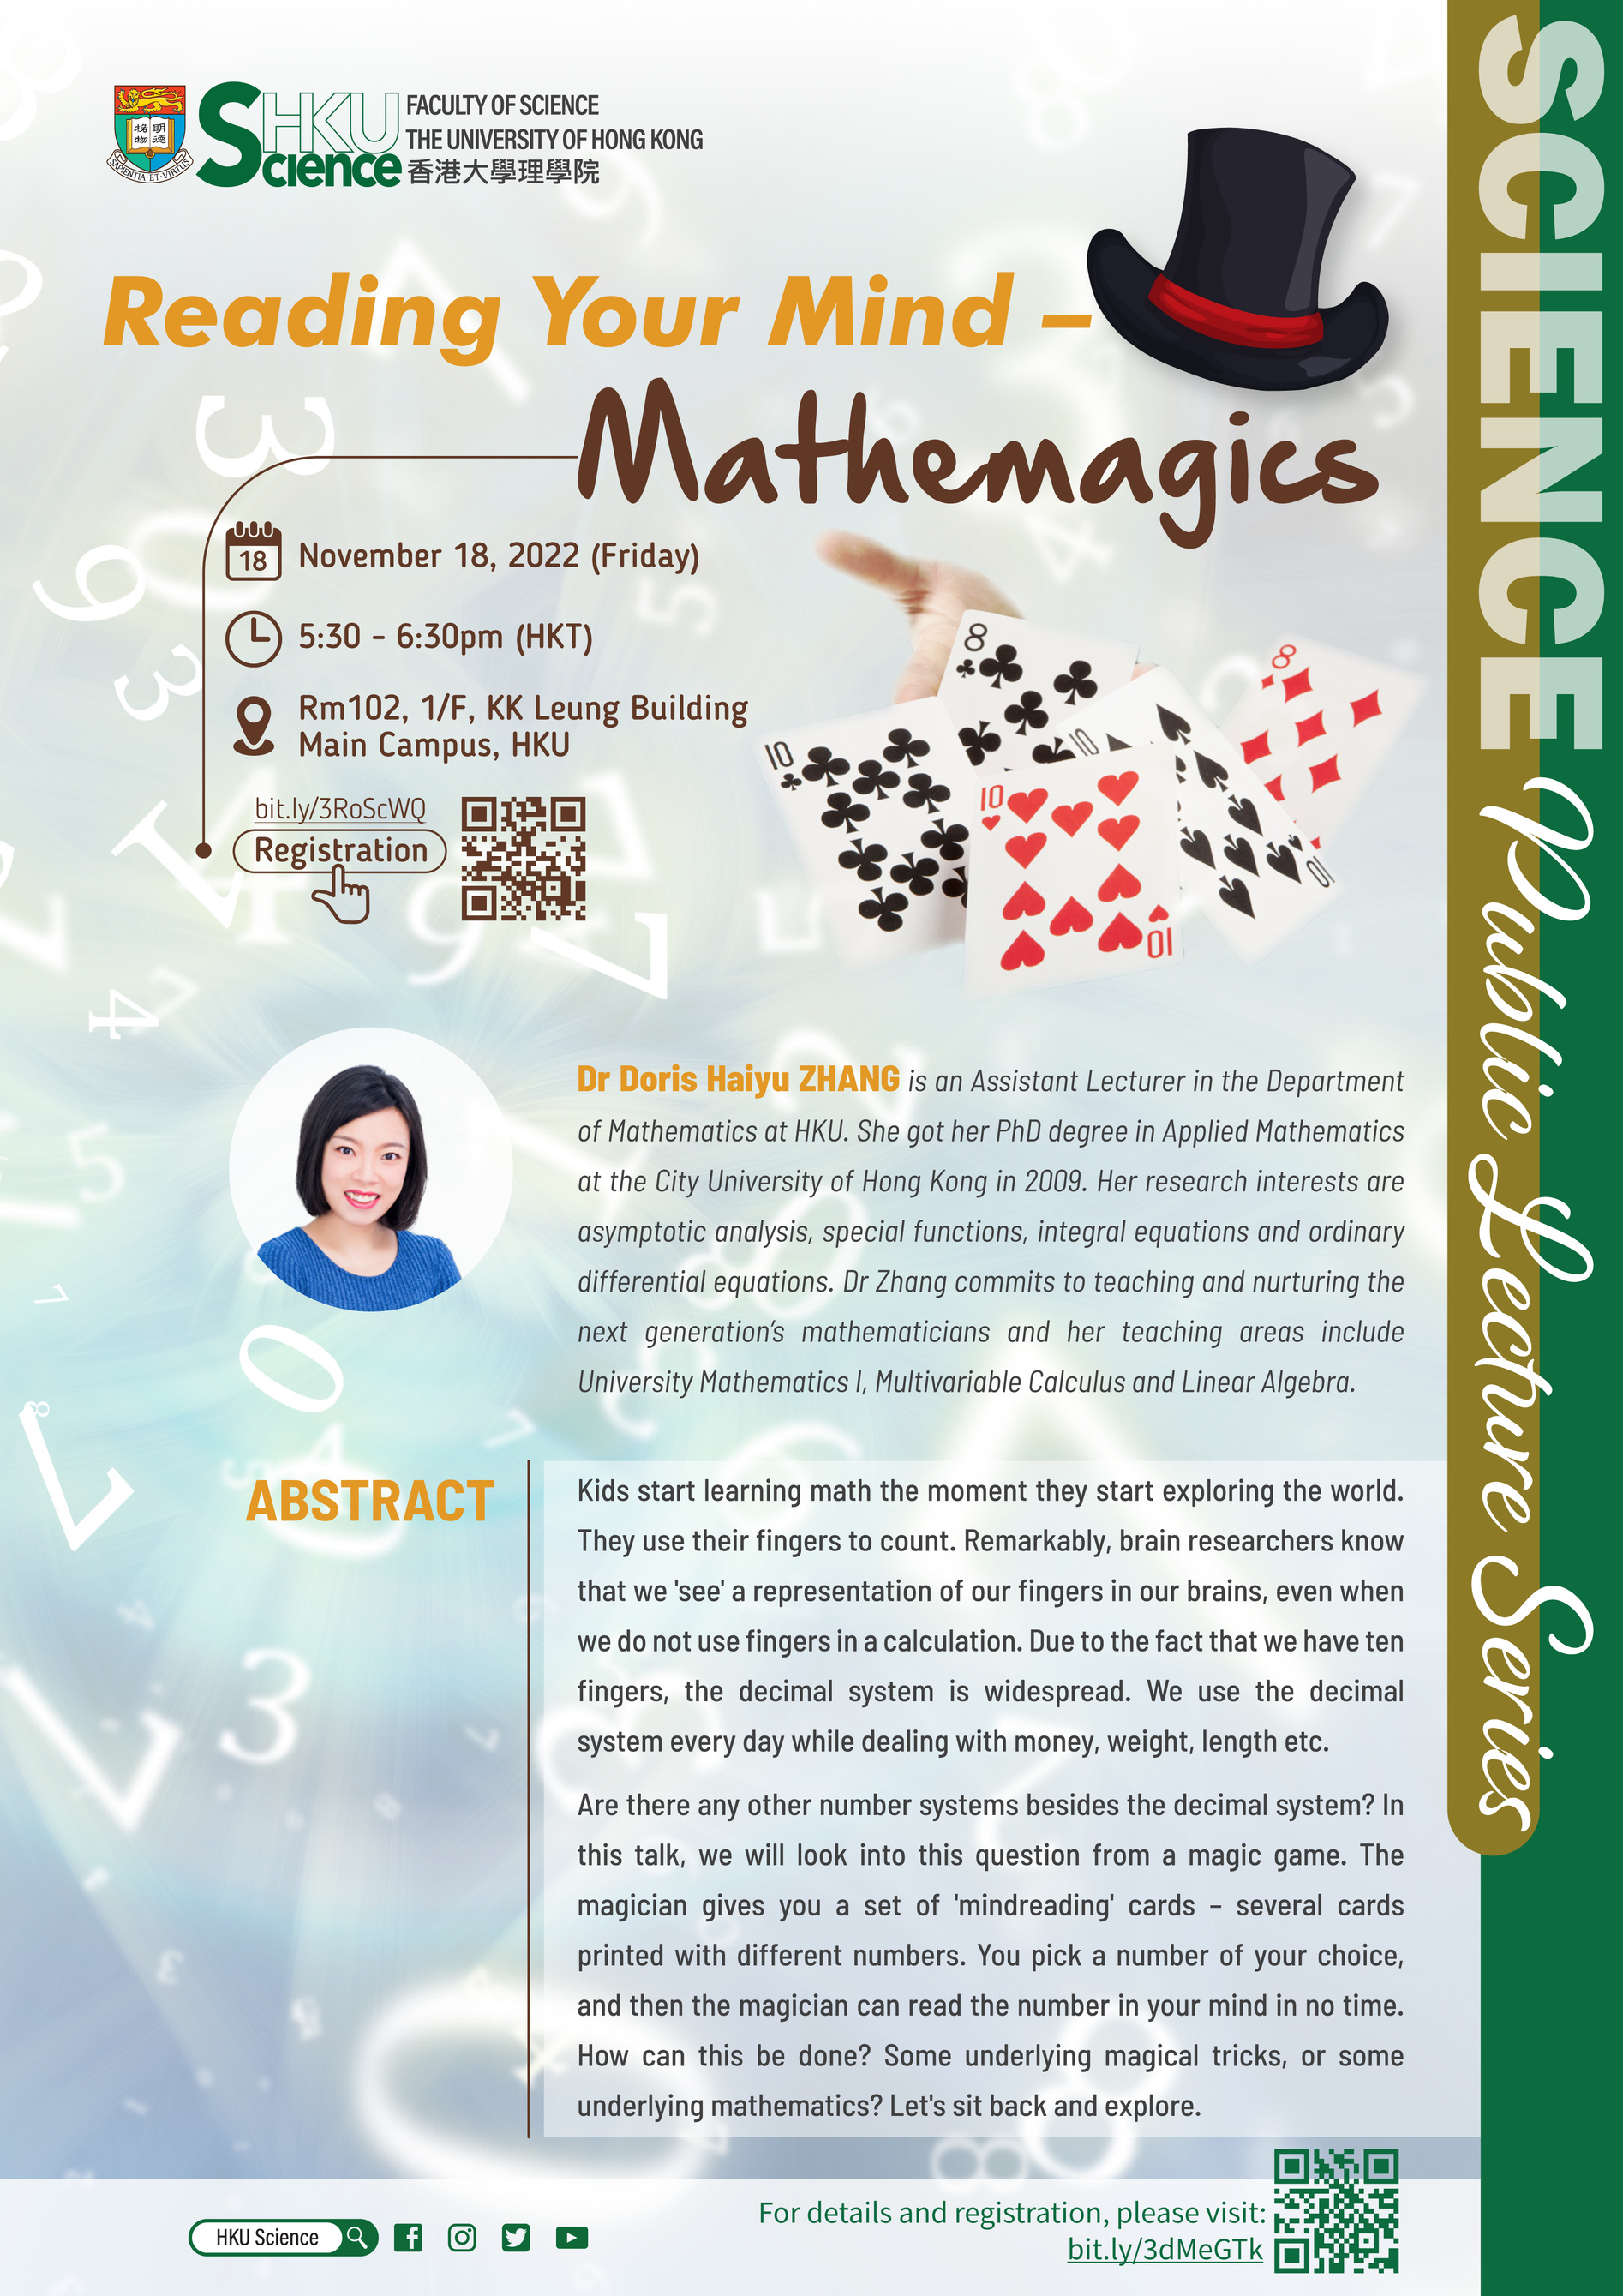 Reading Your Mind: Mathemagics